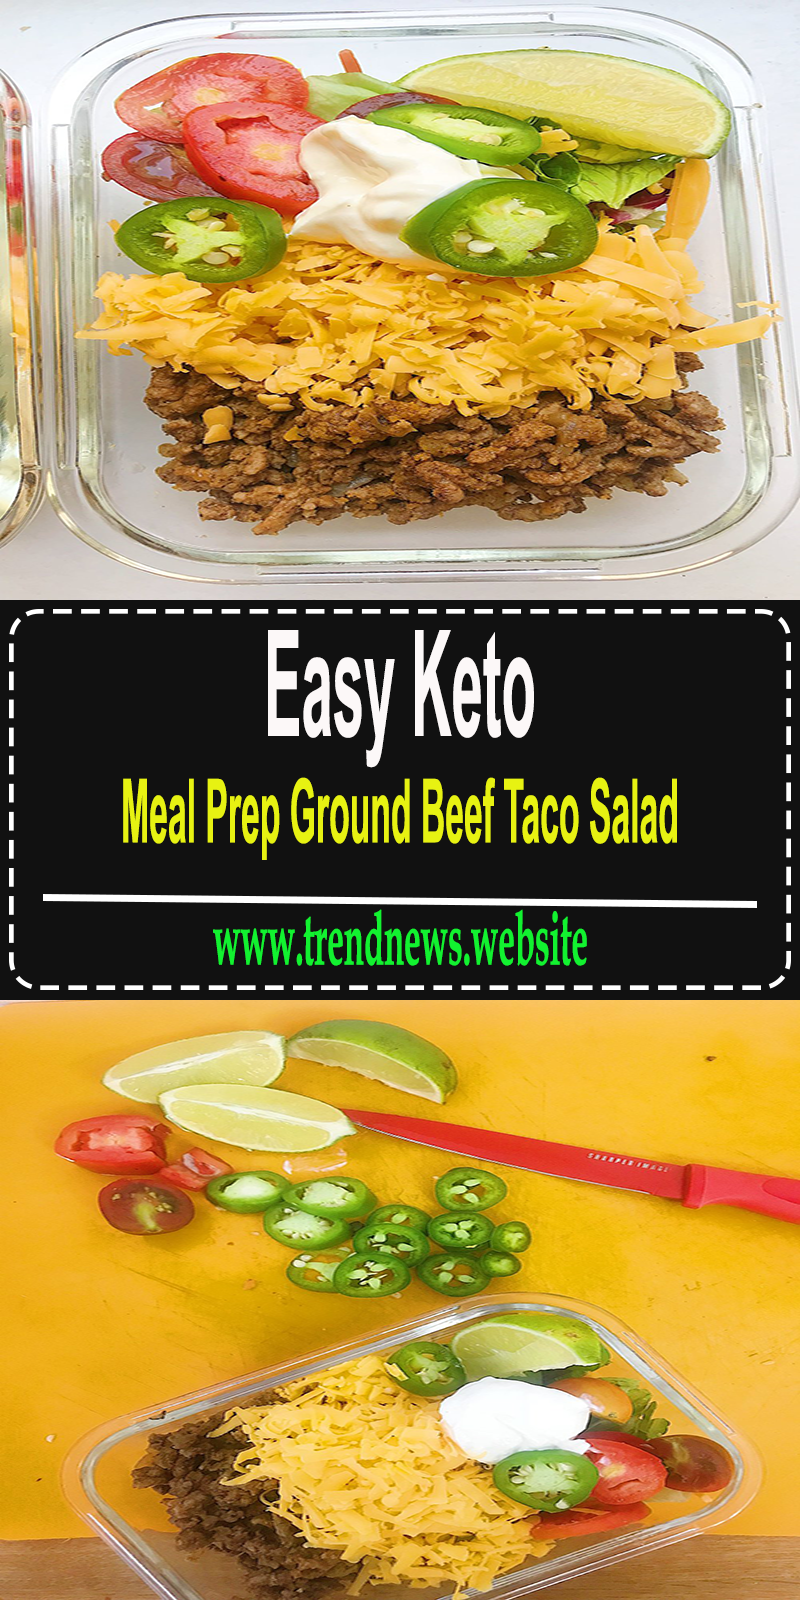 Easy Keto Meal Prep Ground Beef Taco Salad